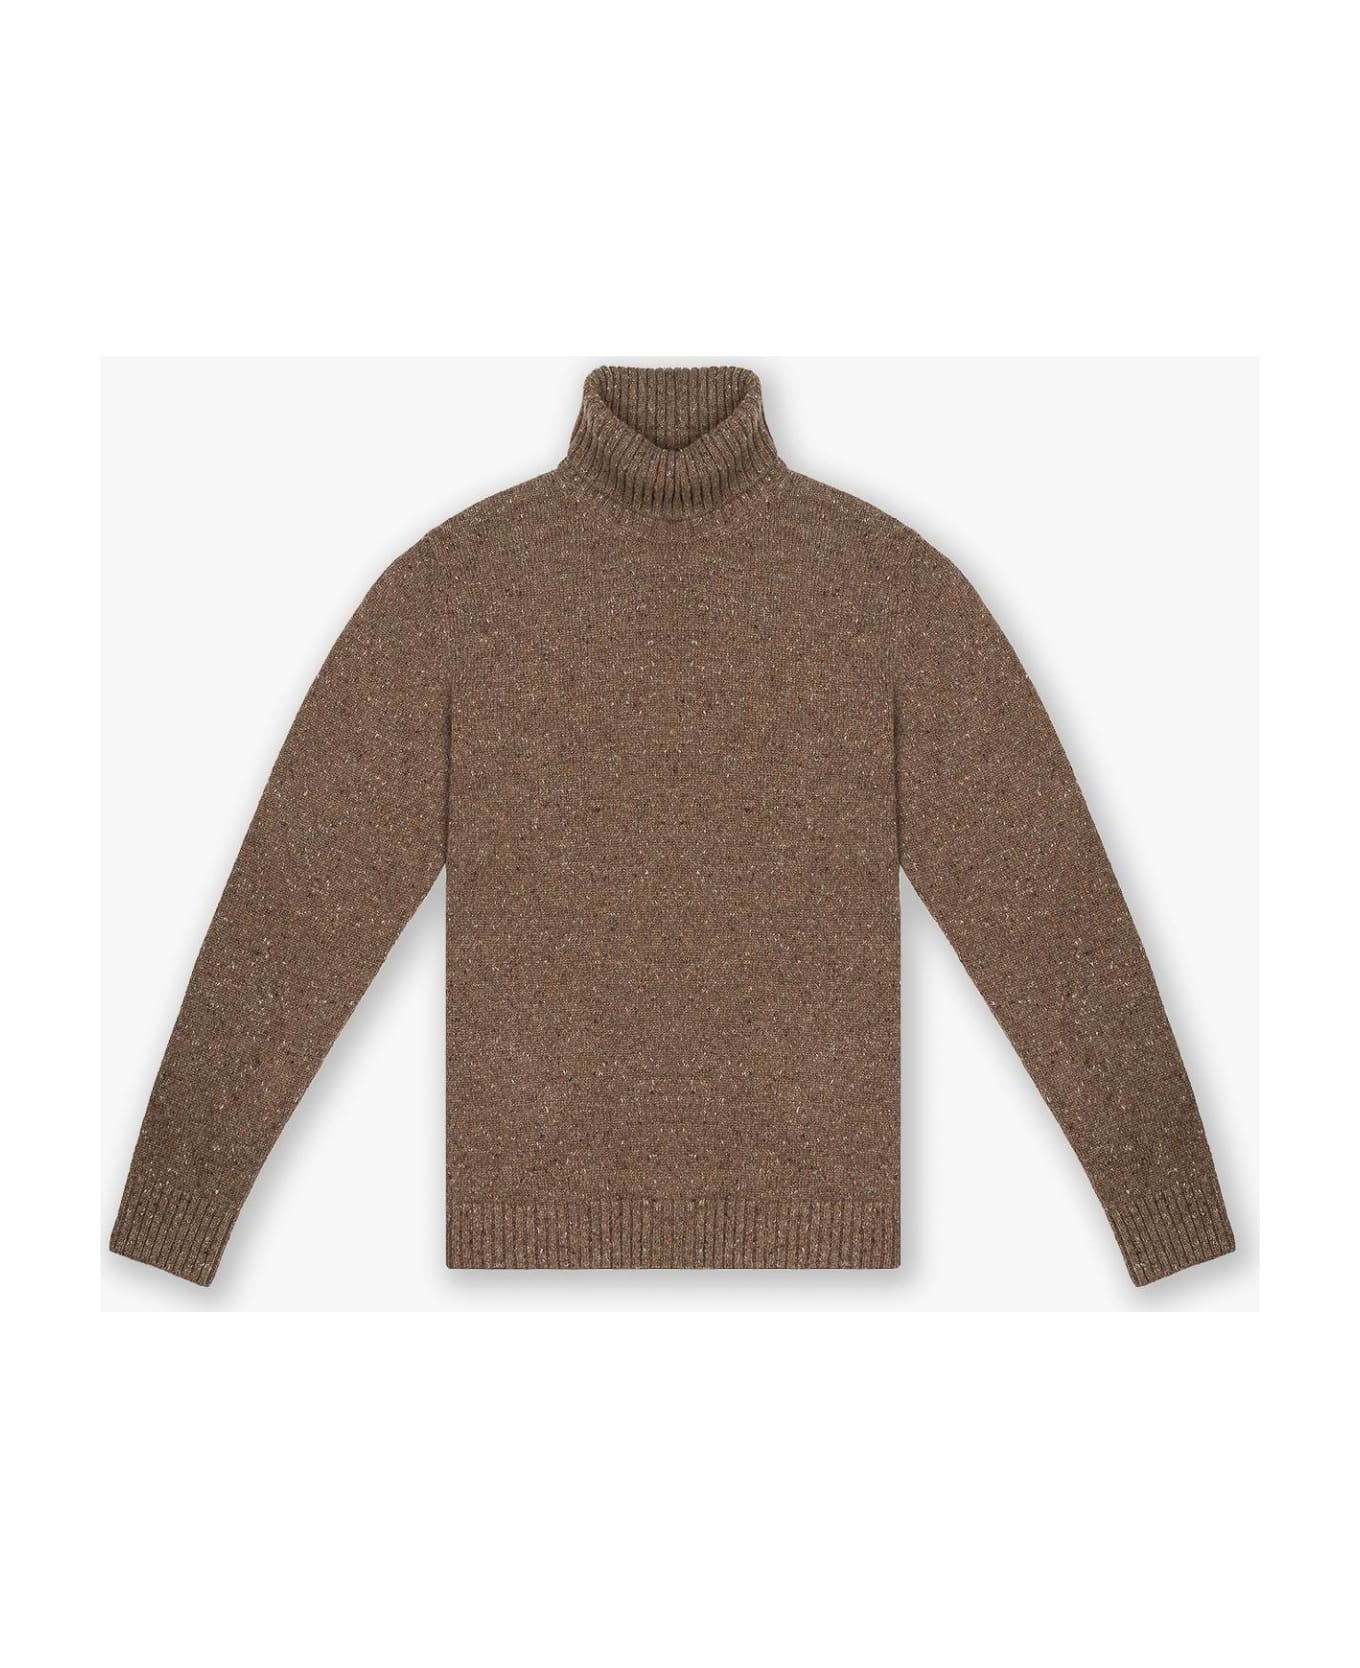 Larusmiani Turtleneck Sweater 'diablerets' Sweater - Brown